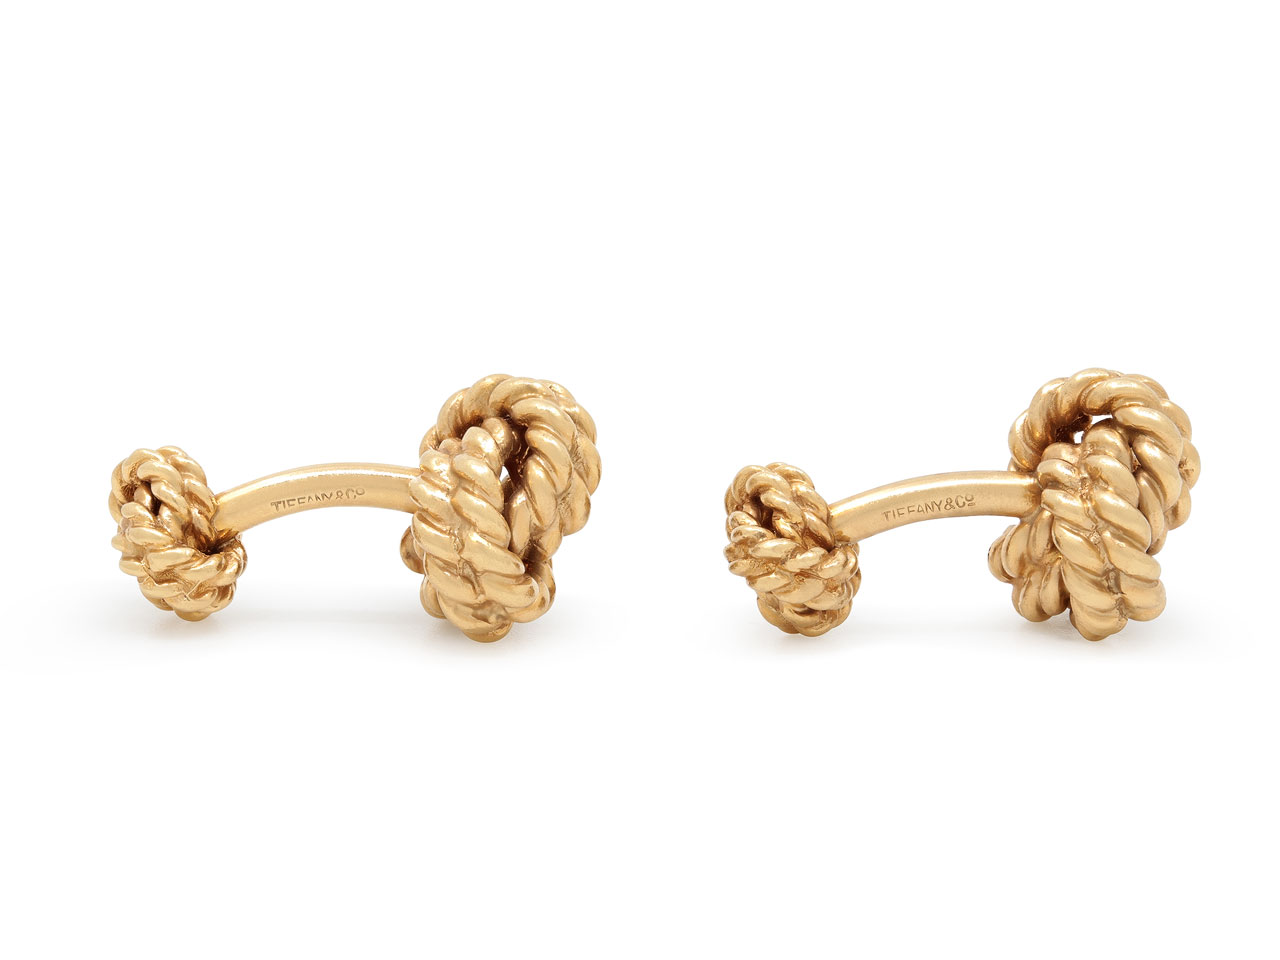 Tiffany & Co. Woven Knot Cufflinks in 14K Gold